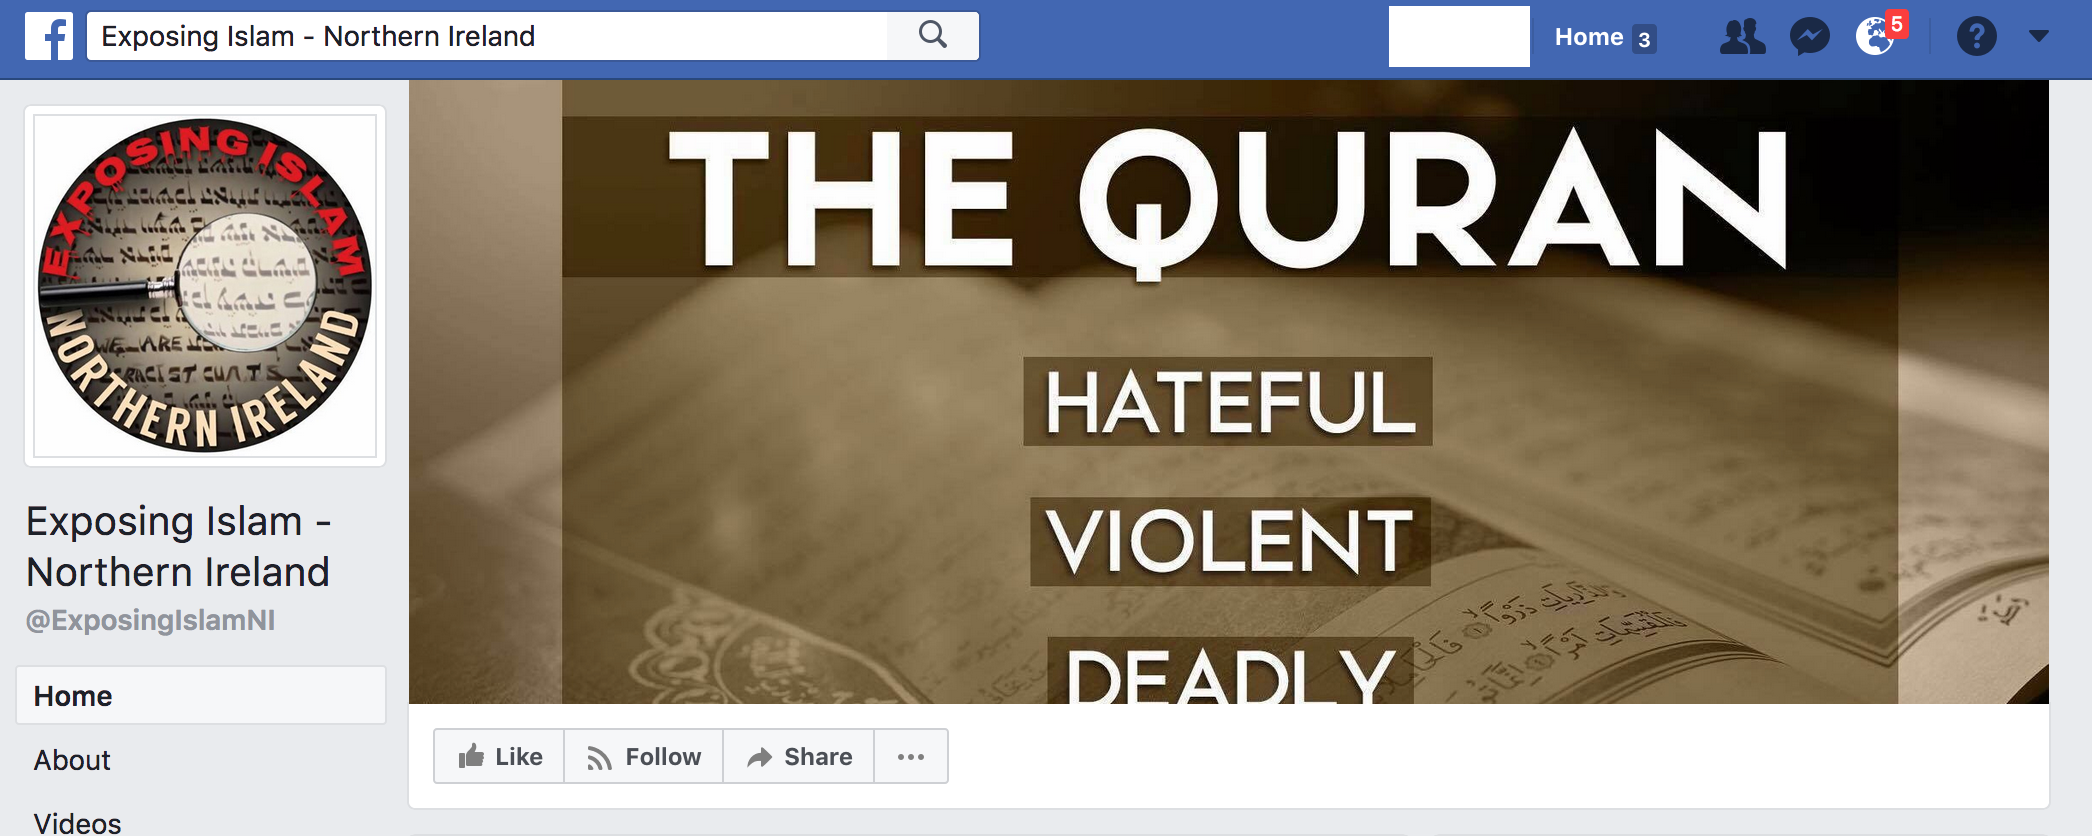 Exposing Islam Facebook Page